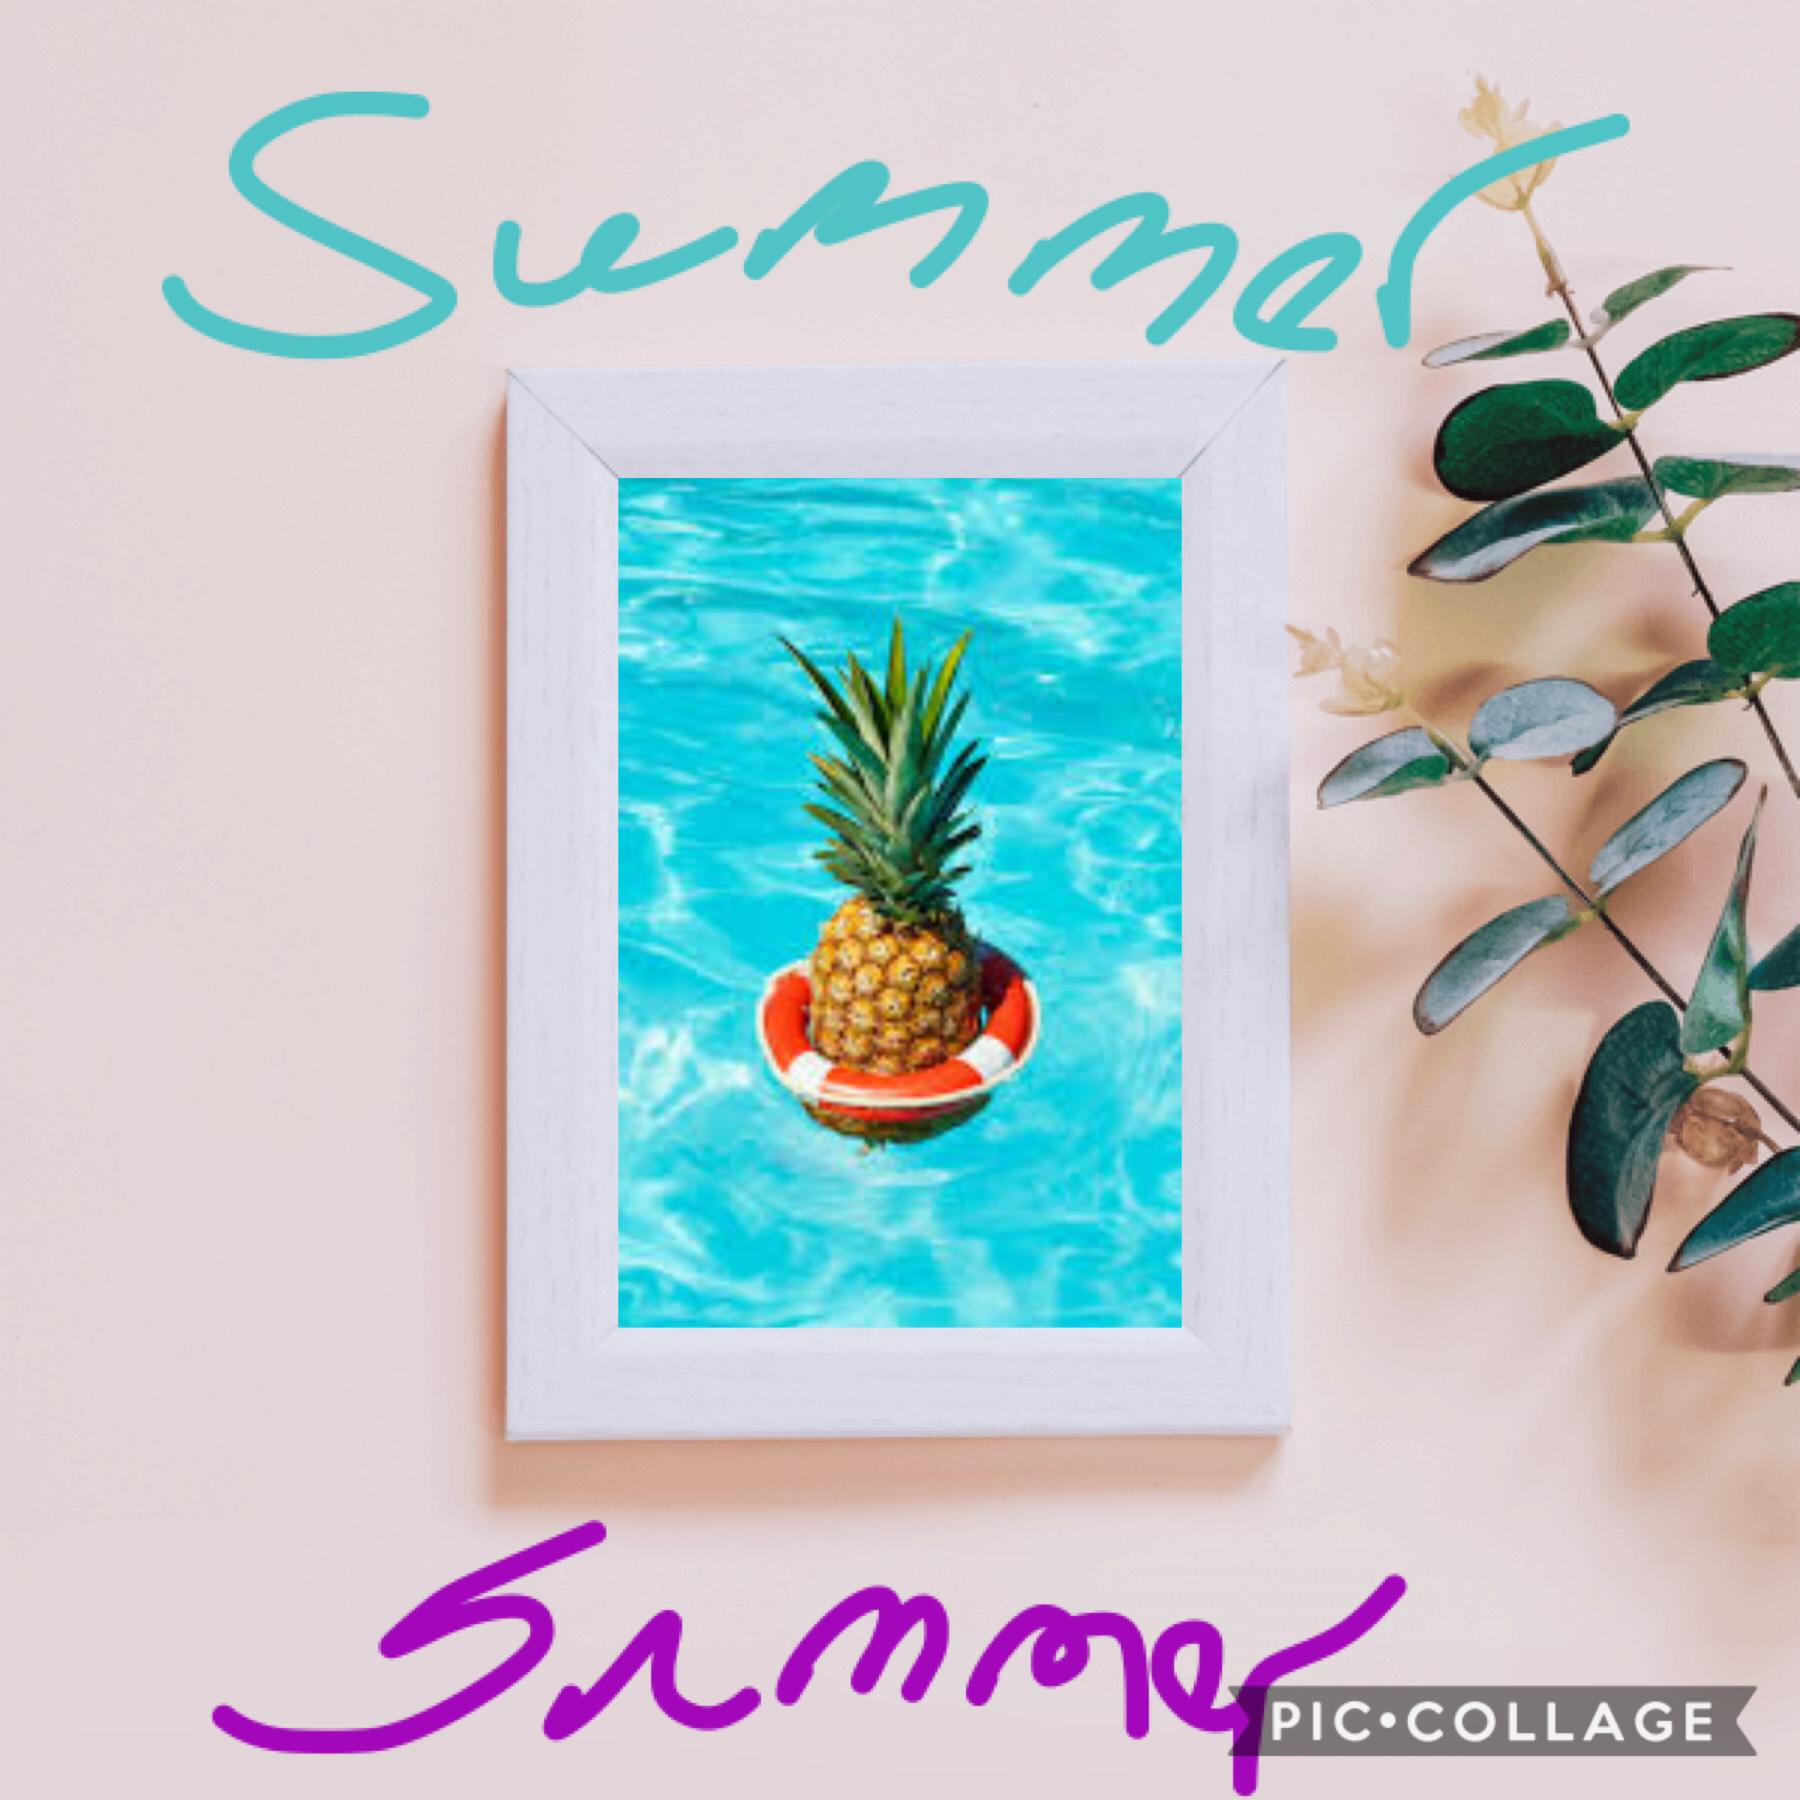 # It’s summer